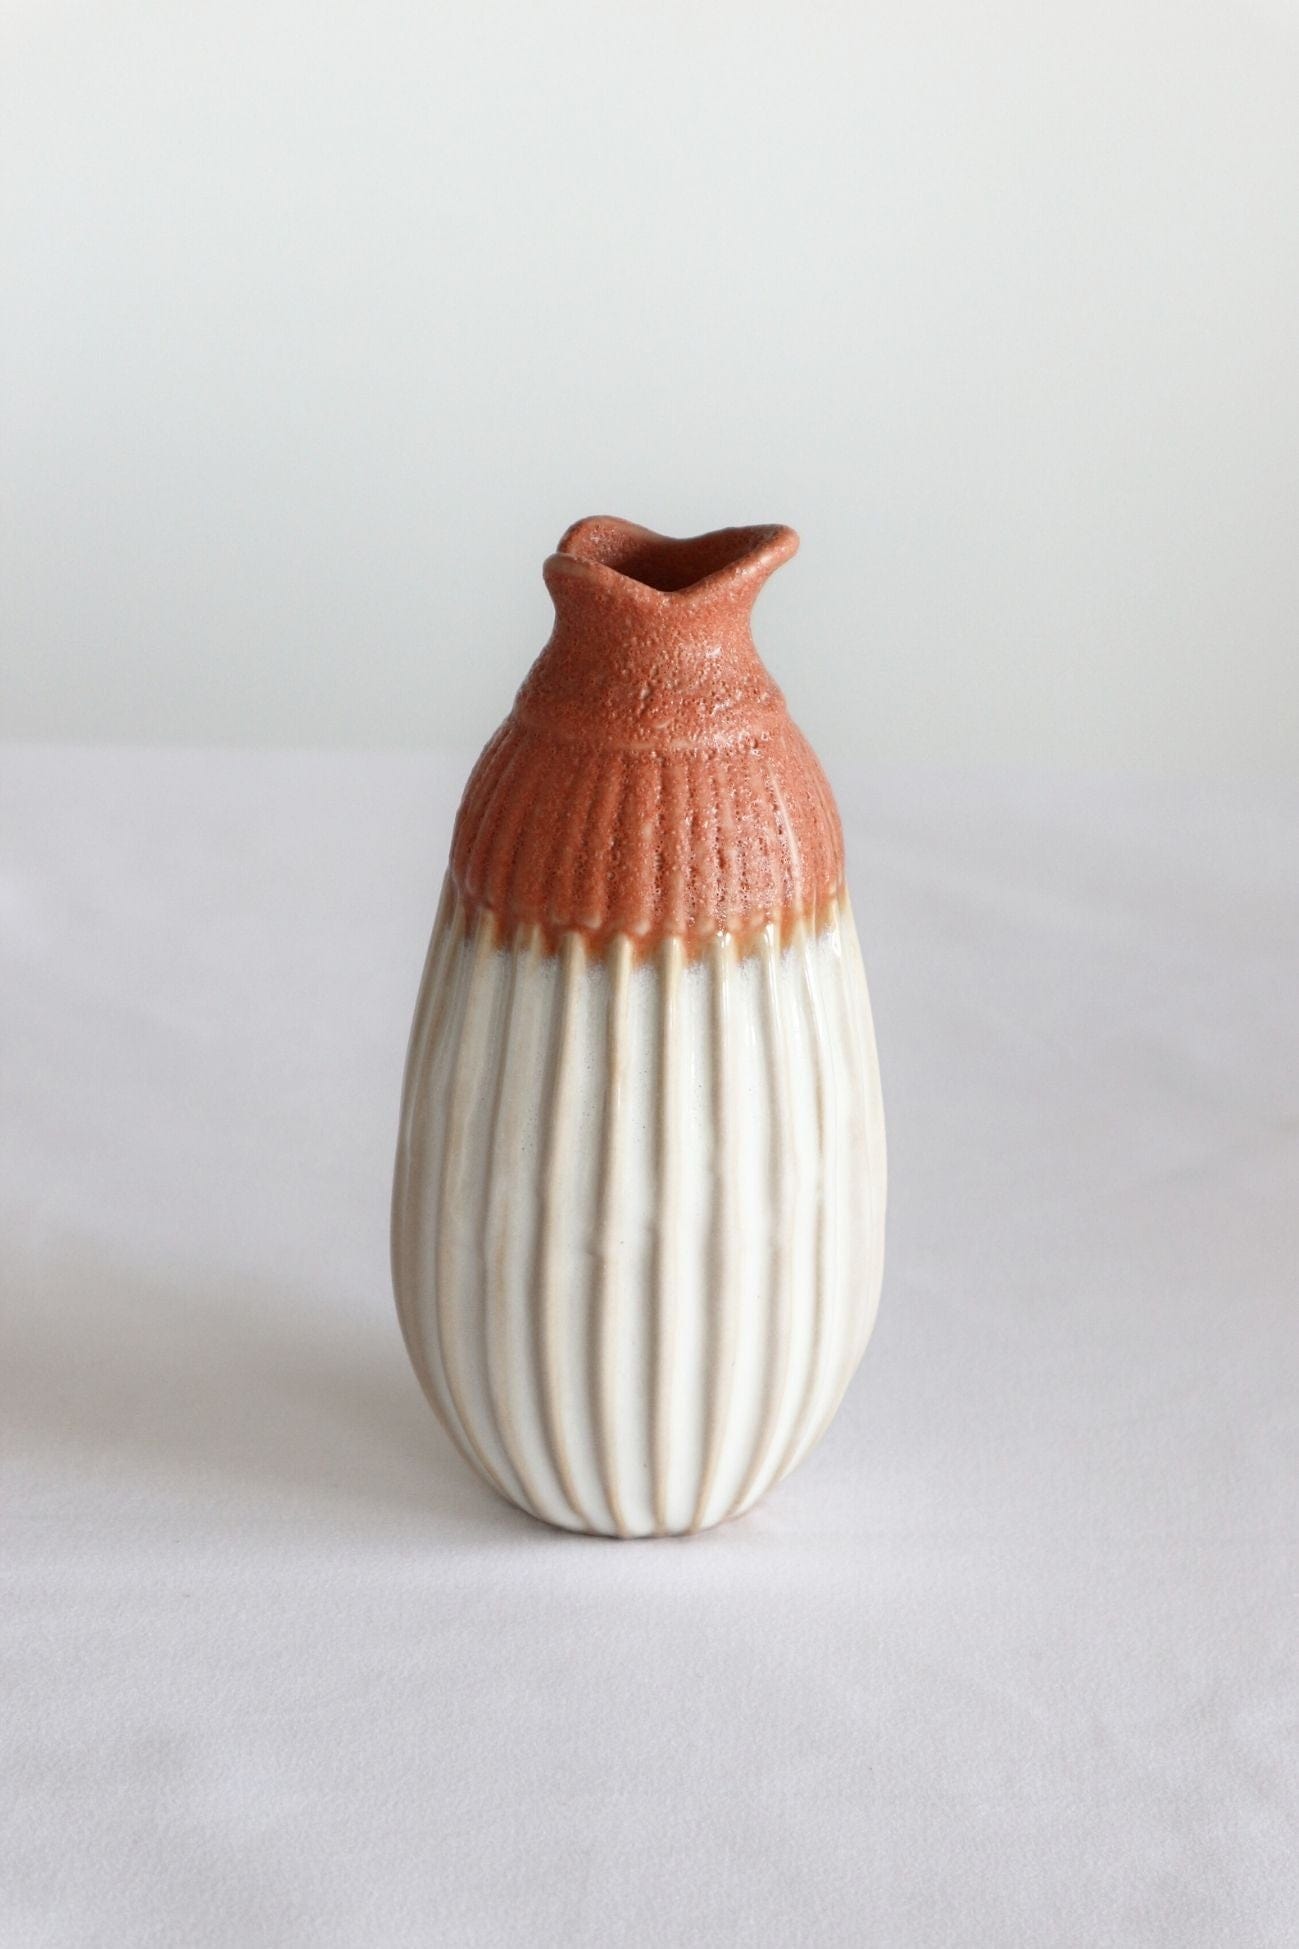 Item International Jaul Jaul - Vaso sfumato in ceramica in stile etnico | Item International